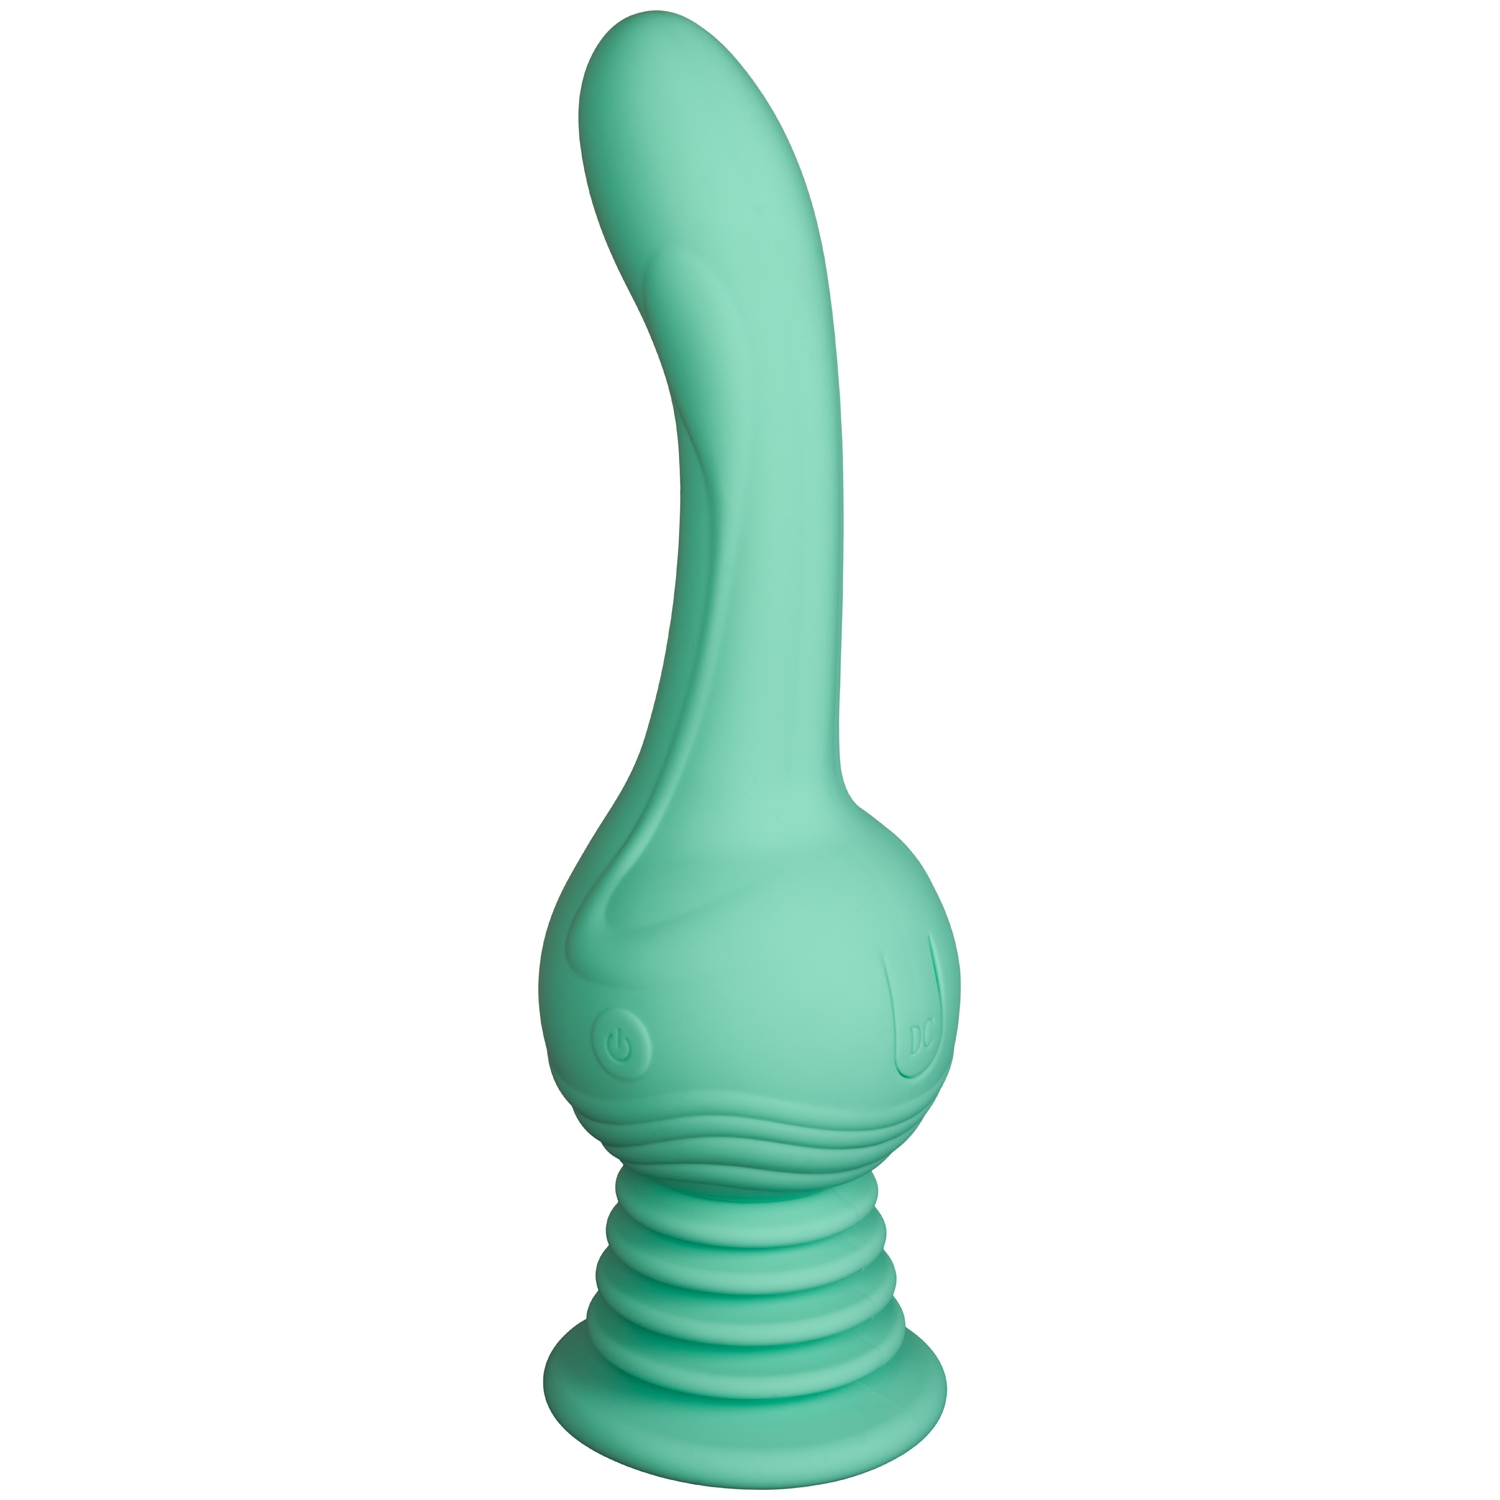 Tracy&apos;s Dog Centrifugal Vaginal Vibrator - Turquoise